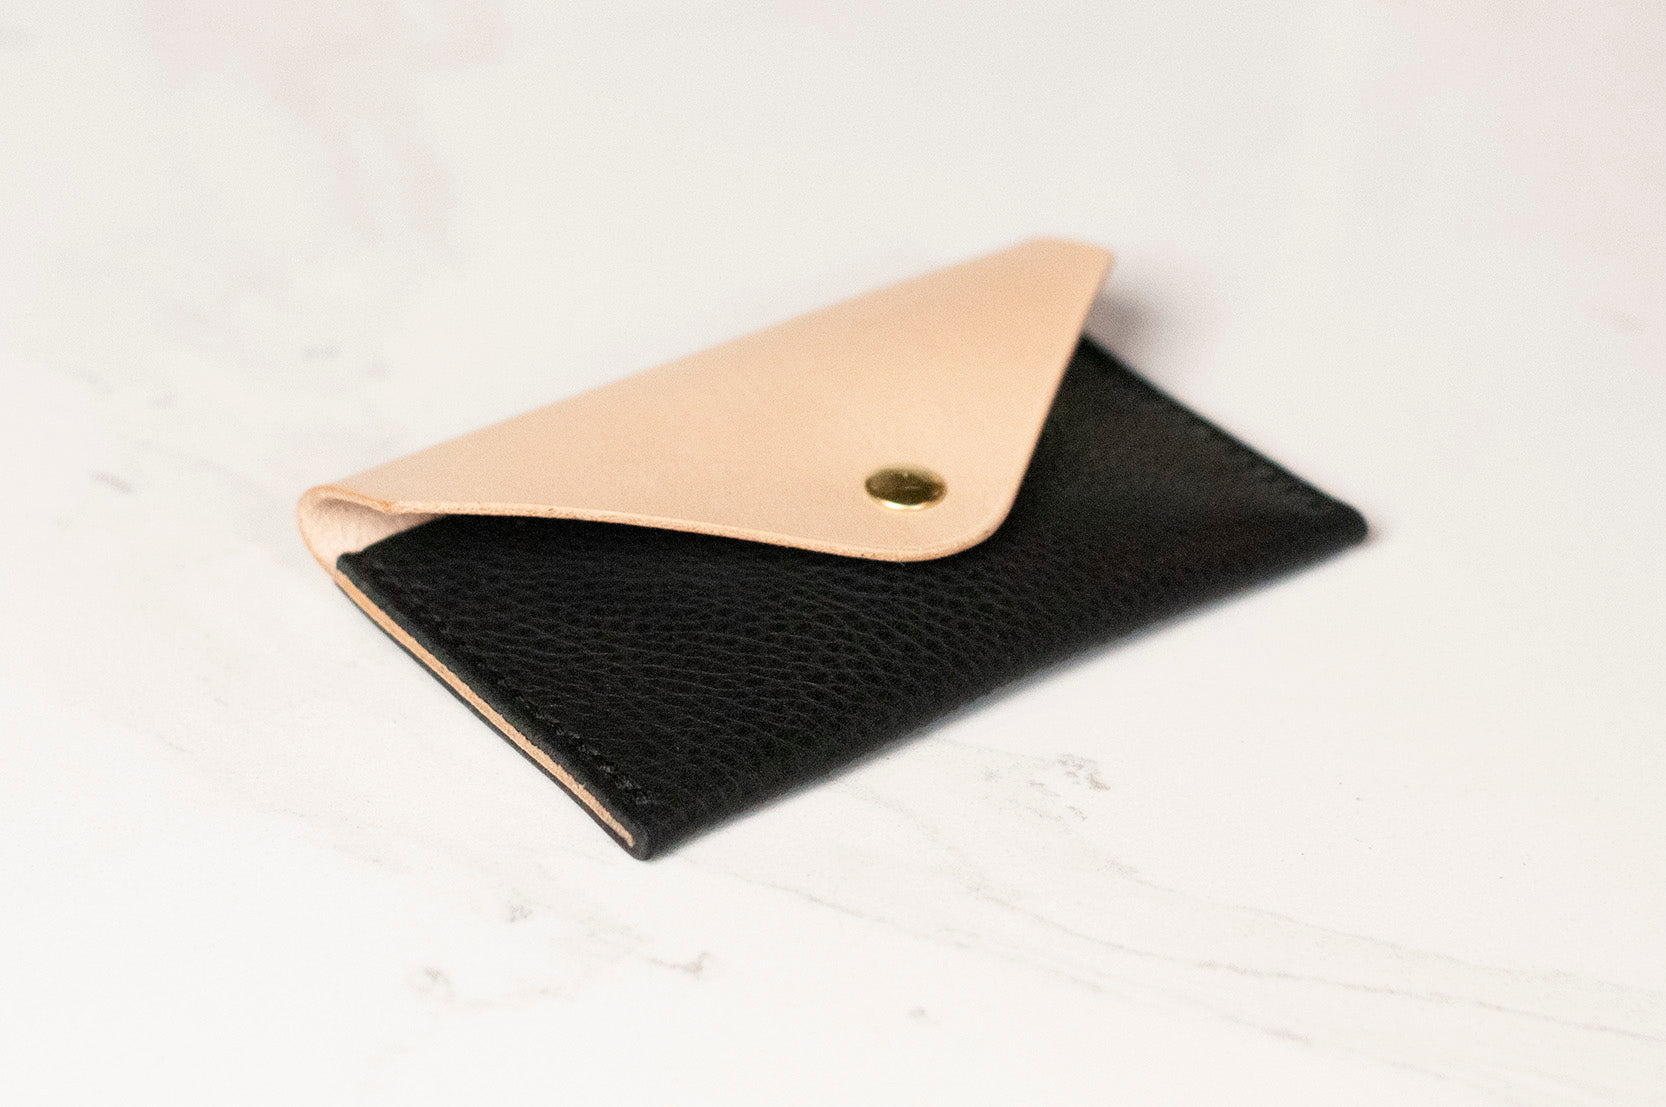  Leather Folded Card Wallet - Handmade Card Holder